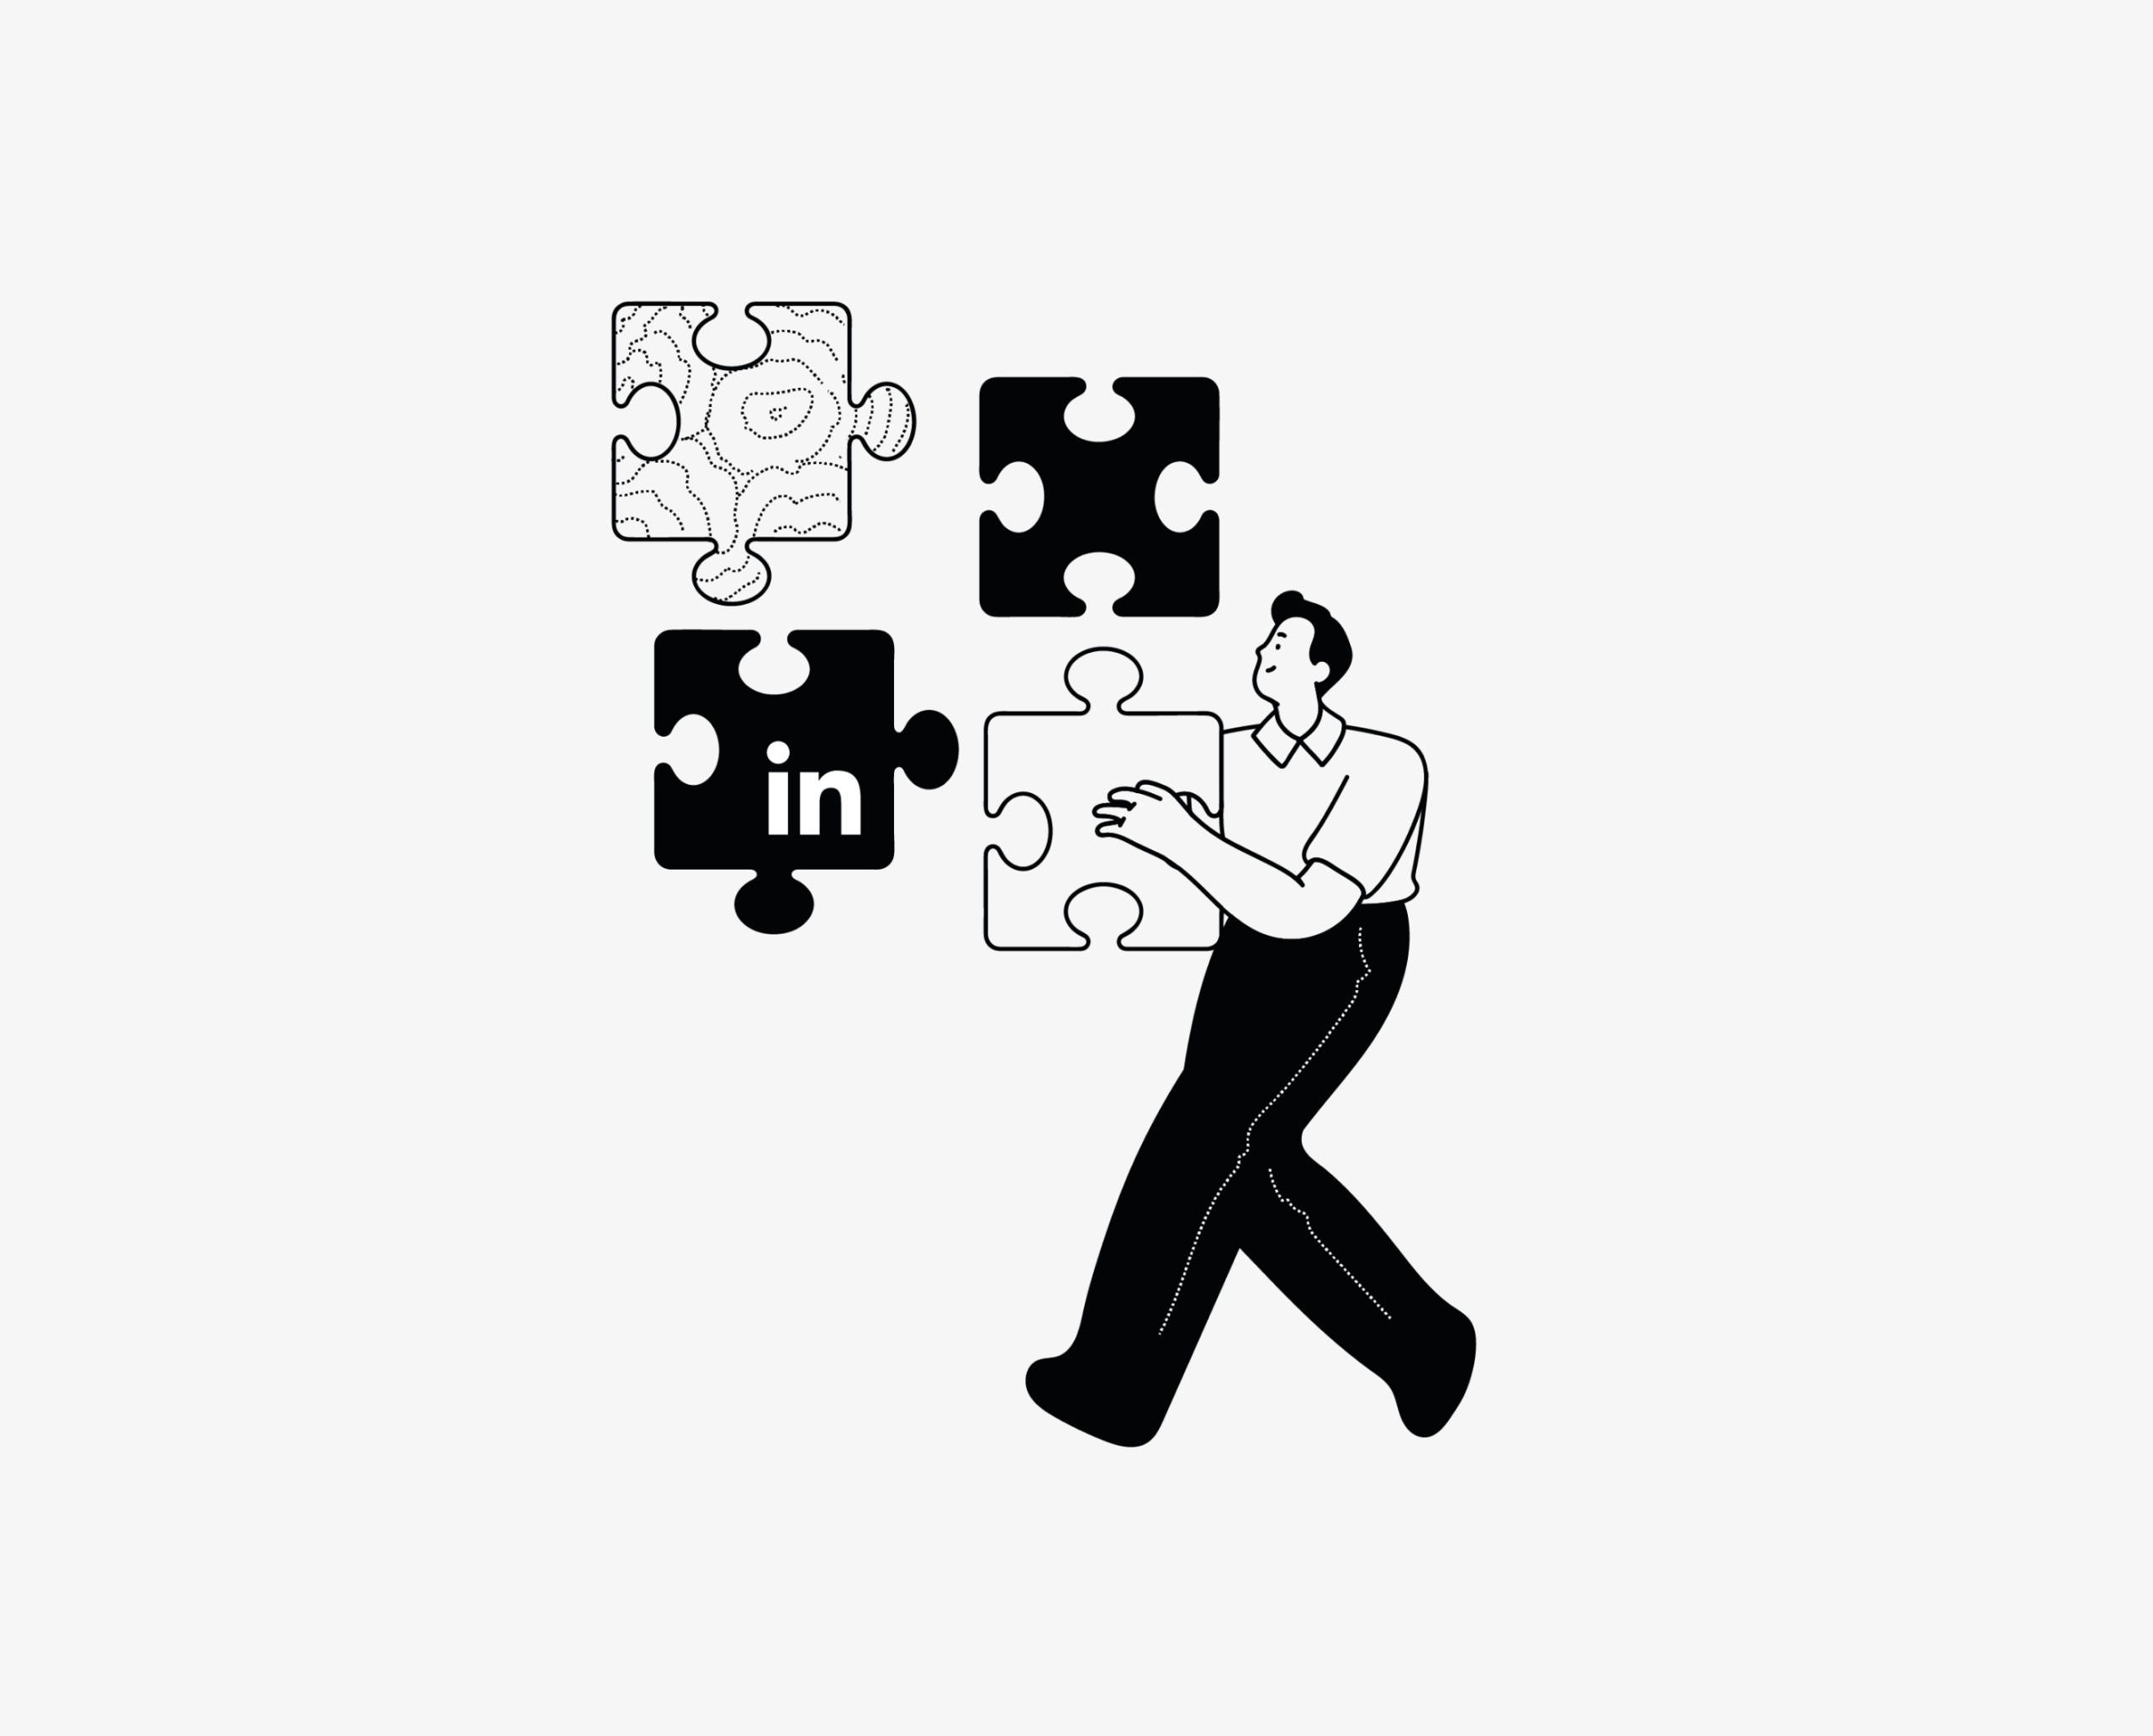 L'importance de LinkedIn Ads dans la stratégie publicitaire - The importance of LinkedIn Ads your advertising strategy